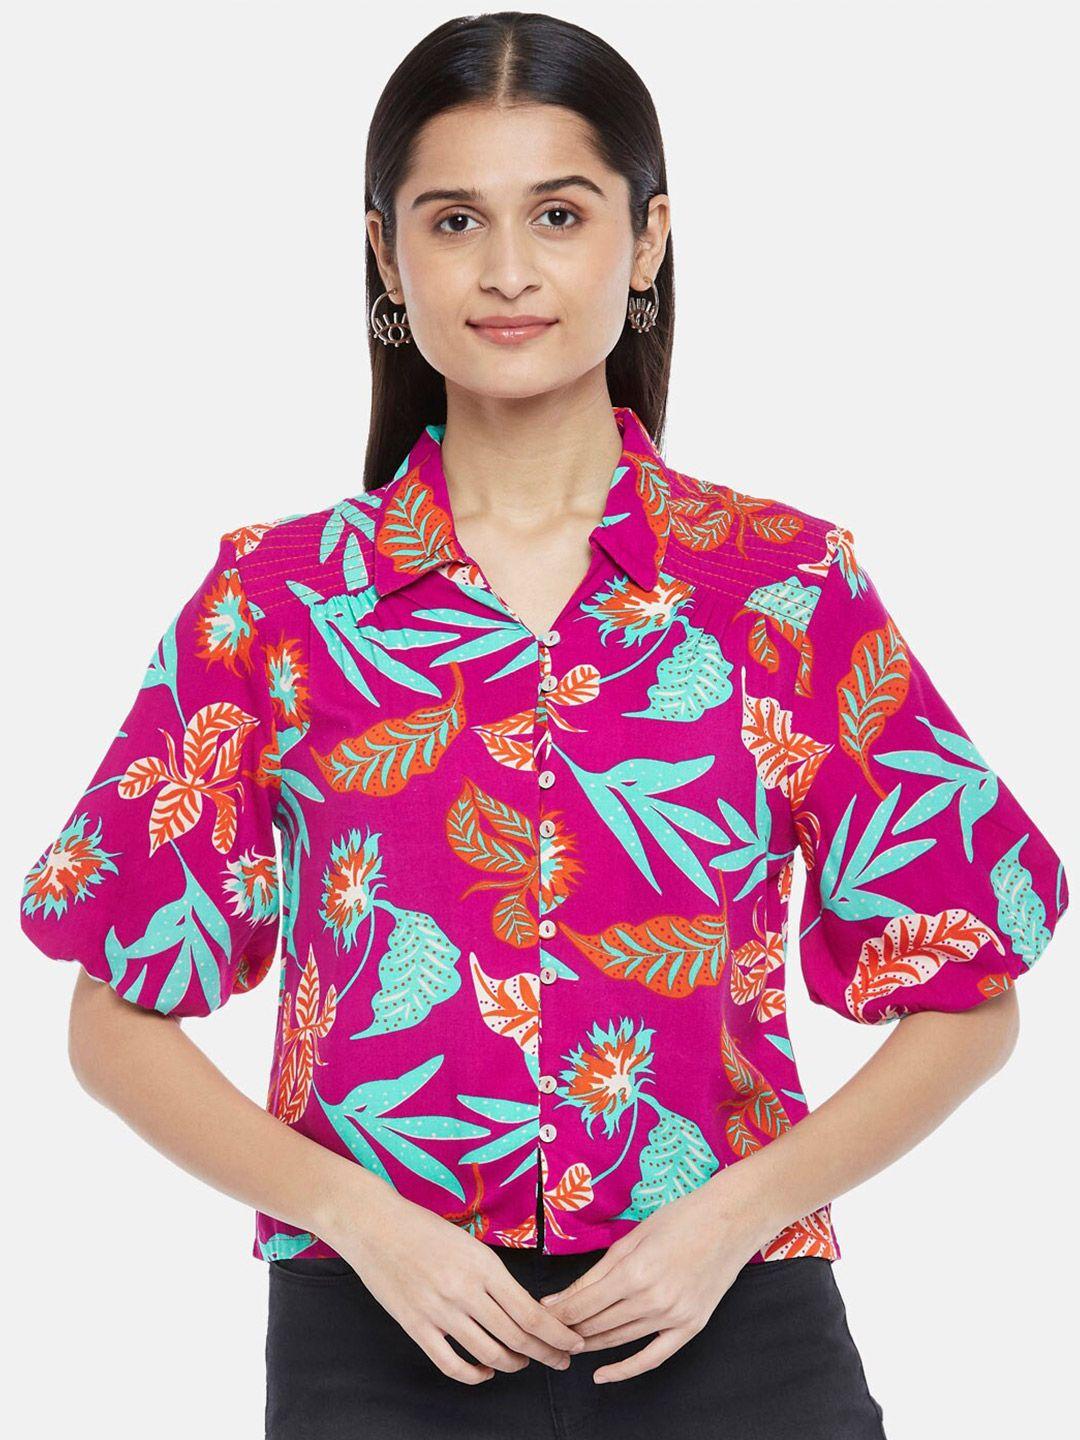 people women purple floral printed liva shirt style crop top